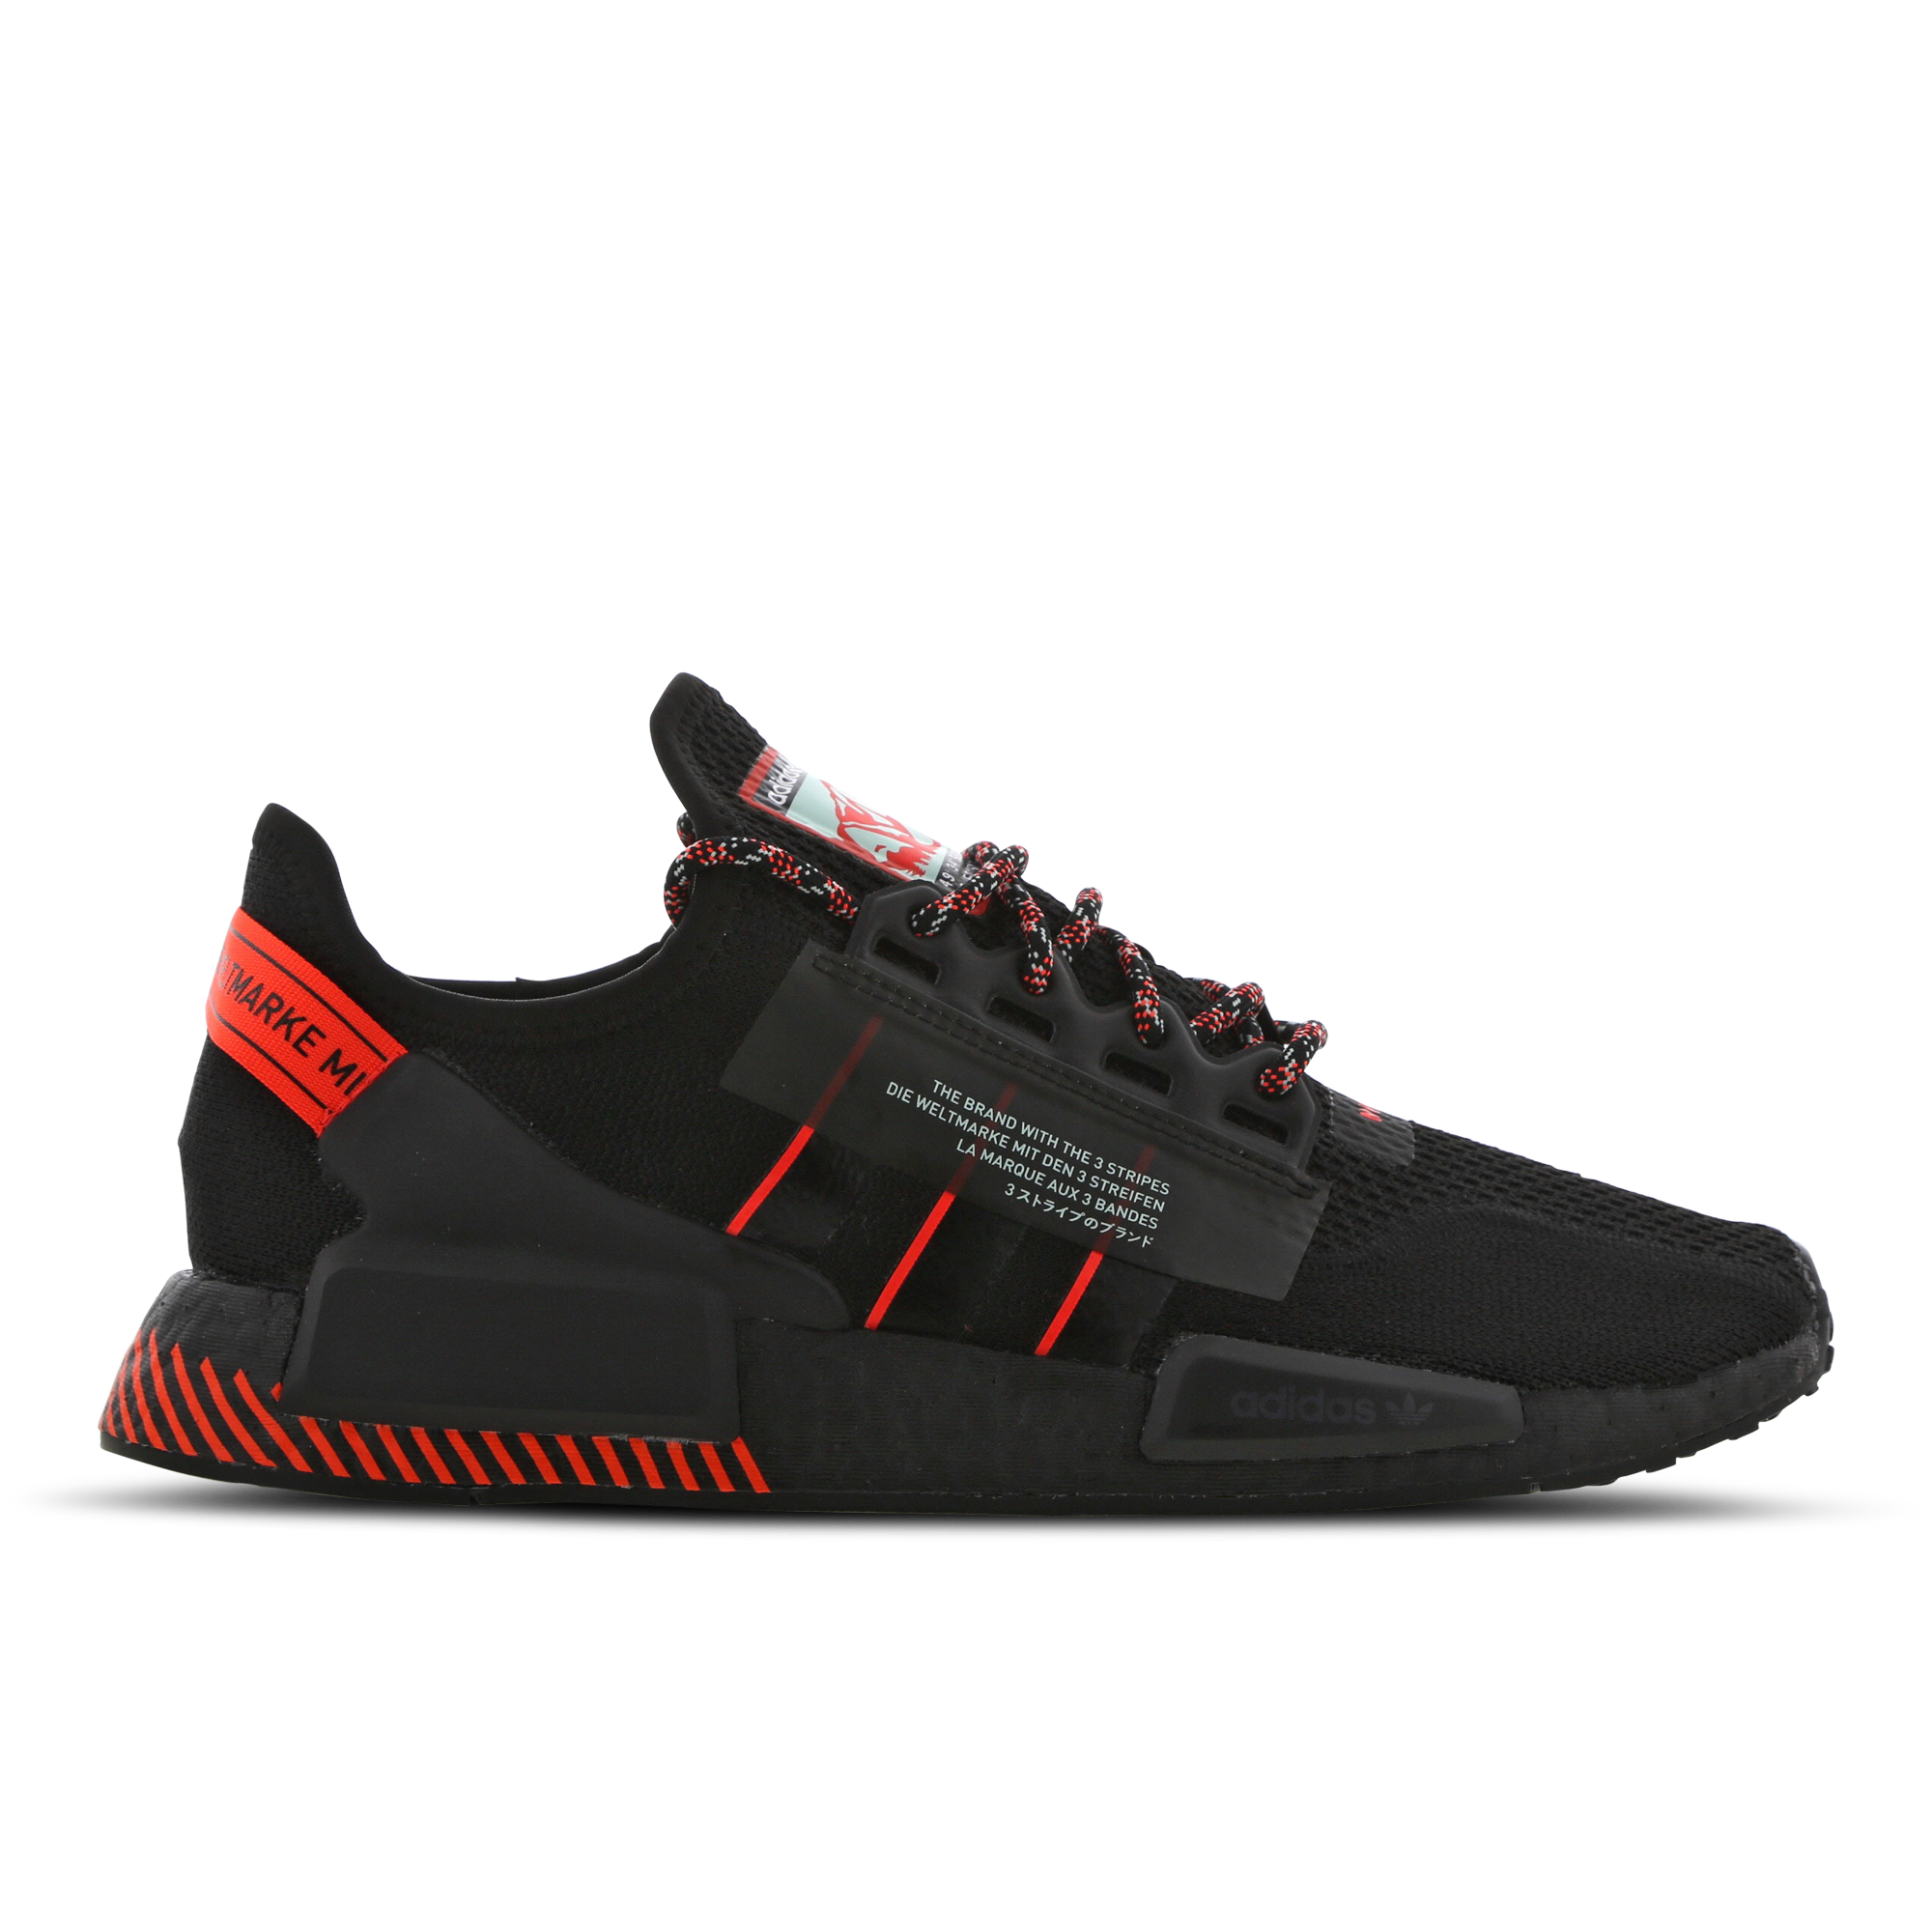 ifntfashion HOYA Adidas NMD R1 PK Sneakers $220 https tco